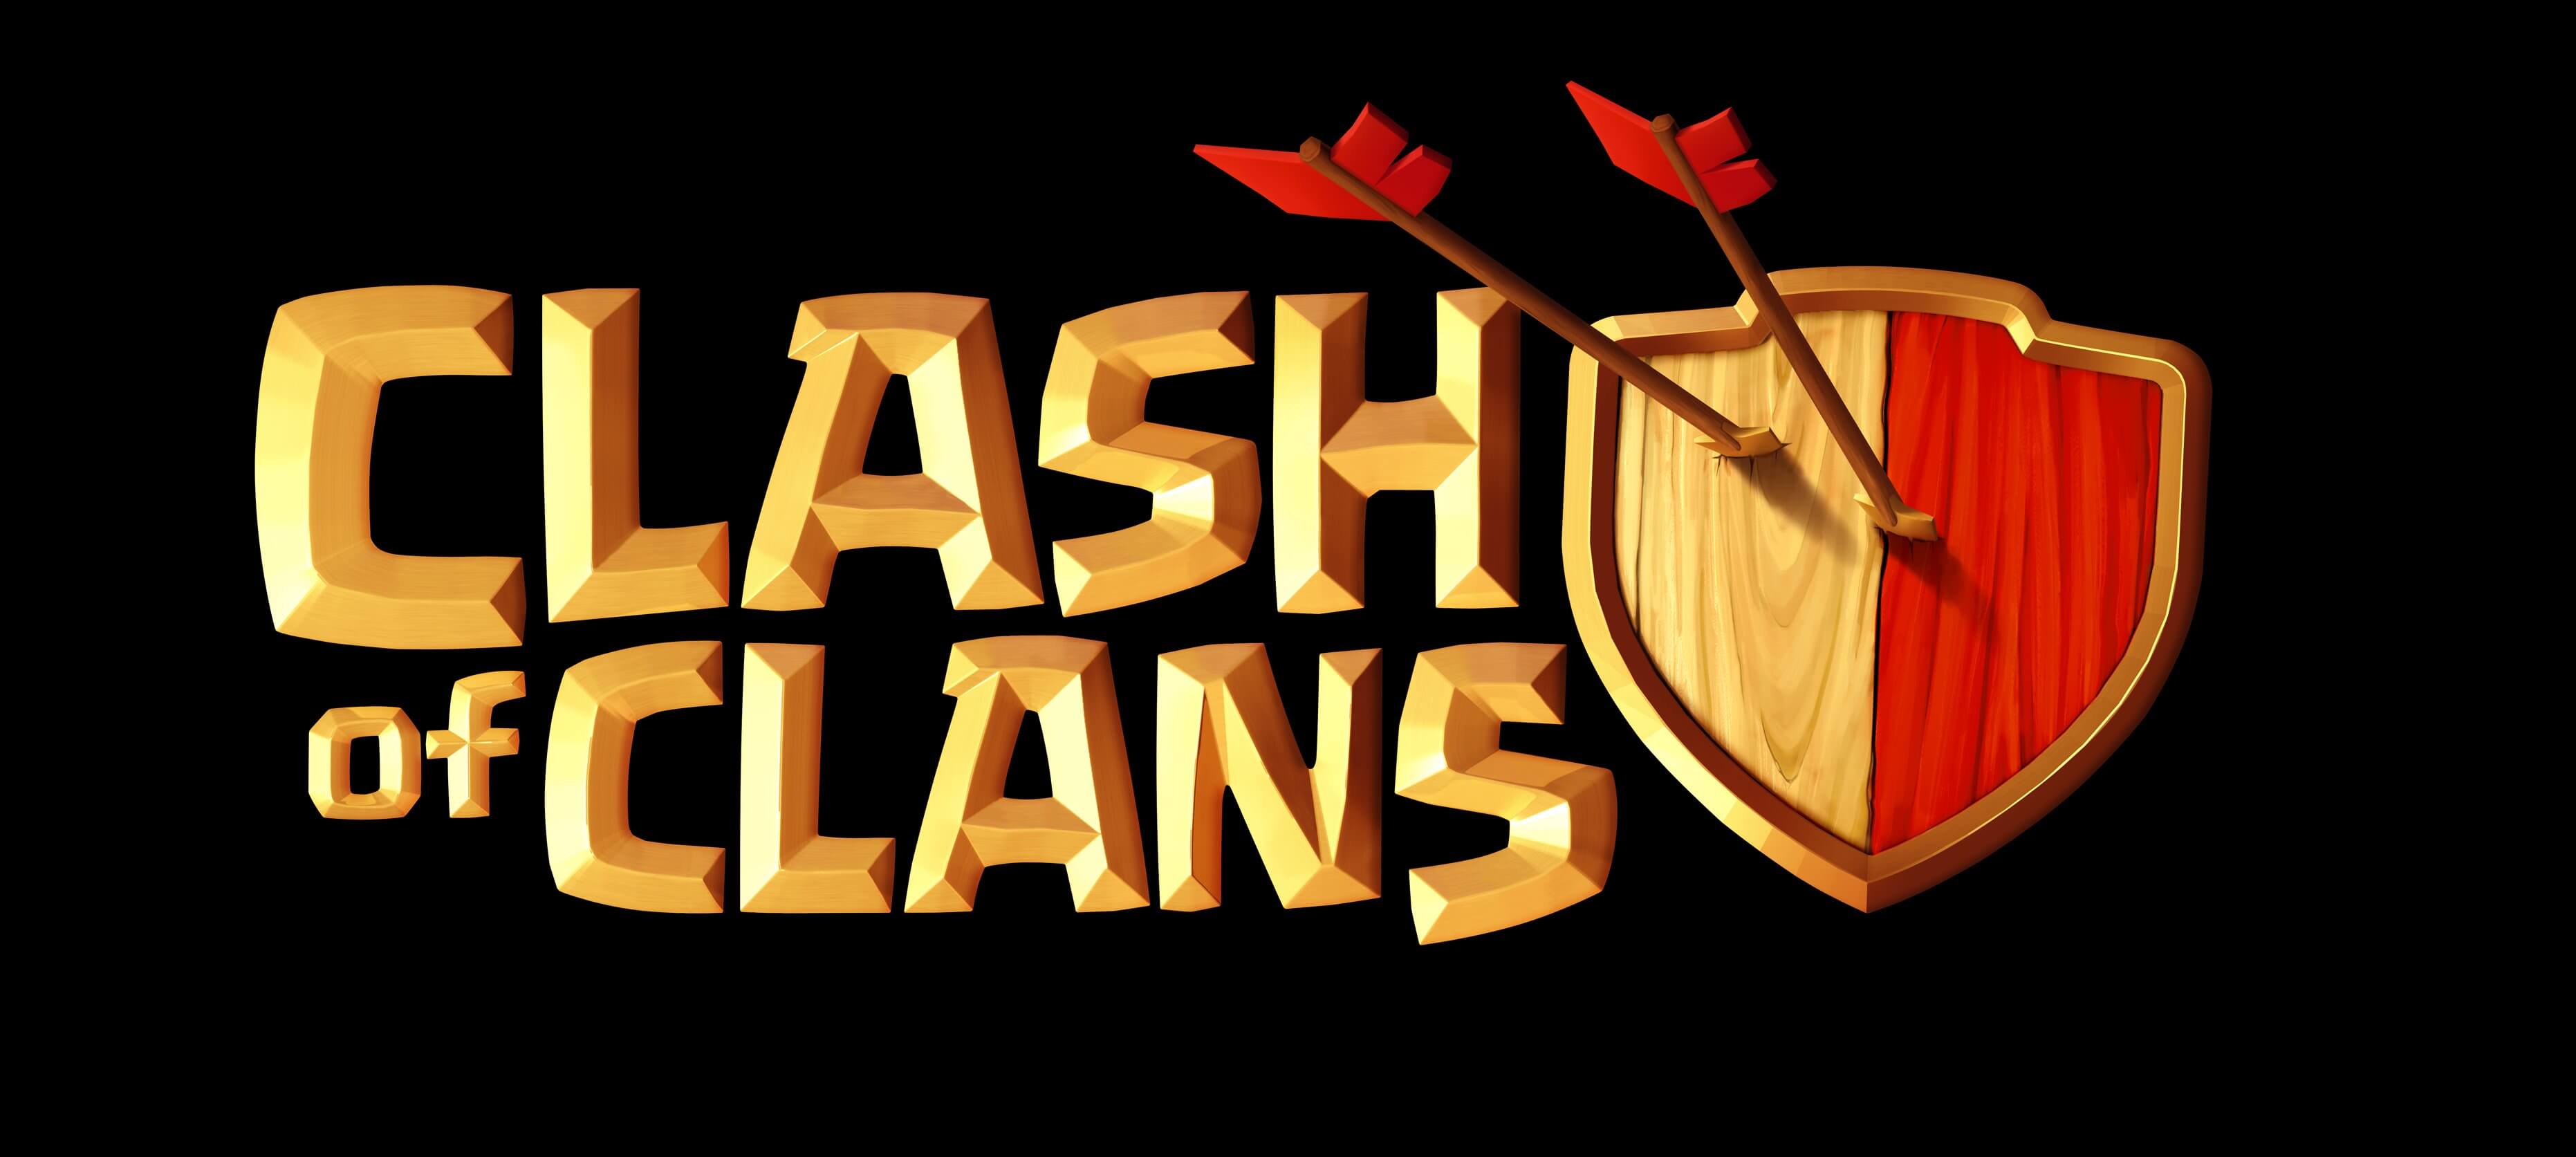 Clash of Clans 4K Black Background